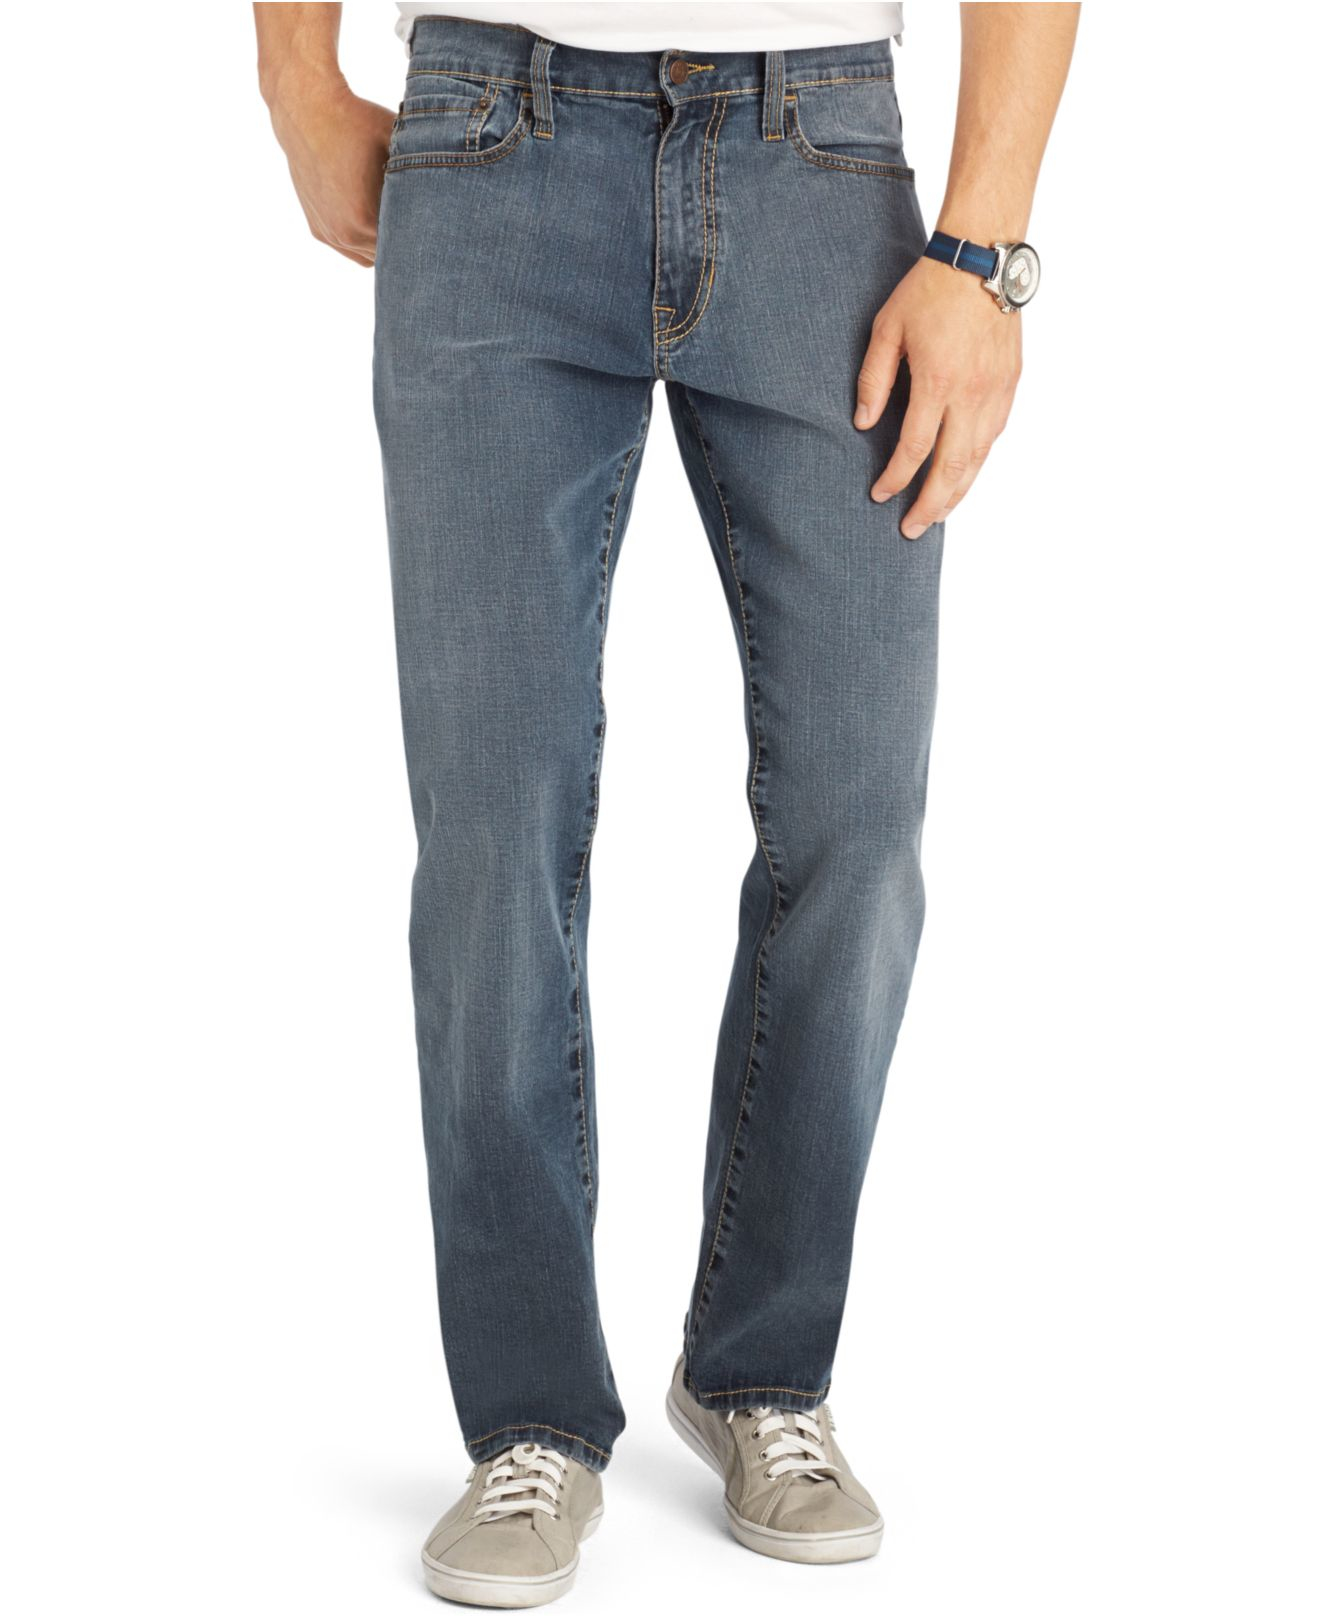 Izod Denim Big And Tall Ultra-comfort Stretch Jeans in Vintage Blue (Blue)  for Men - Lyst